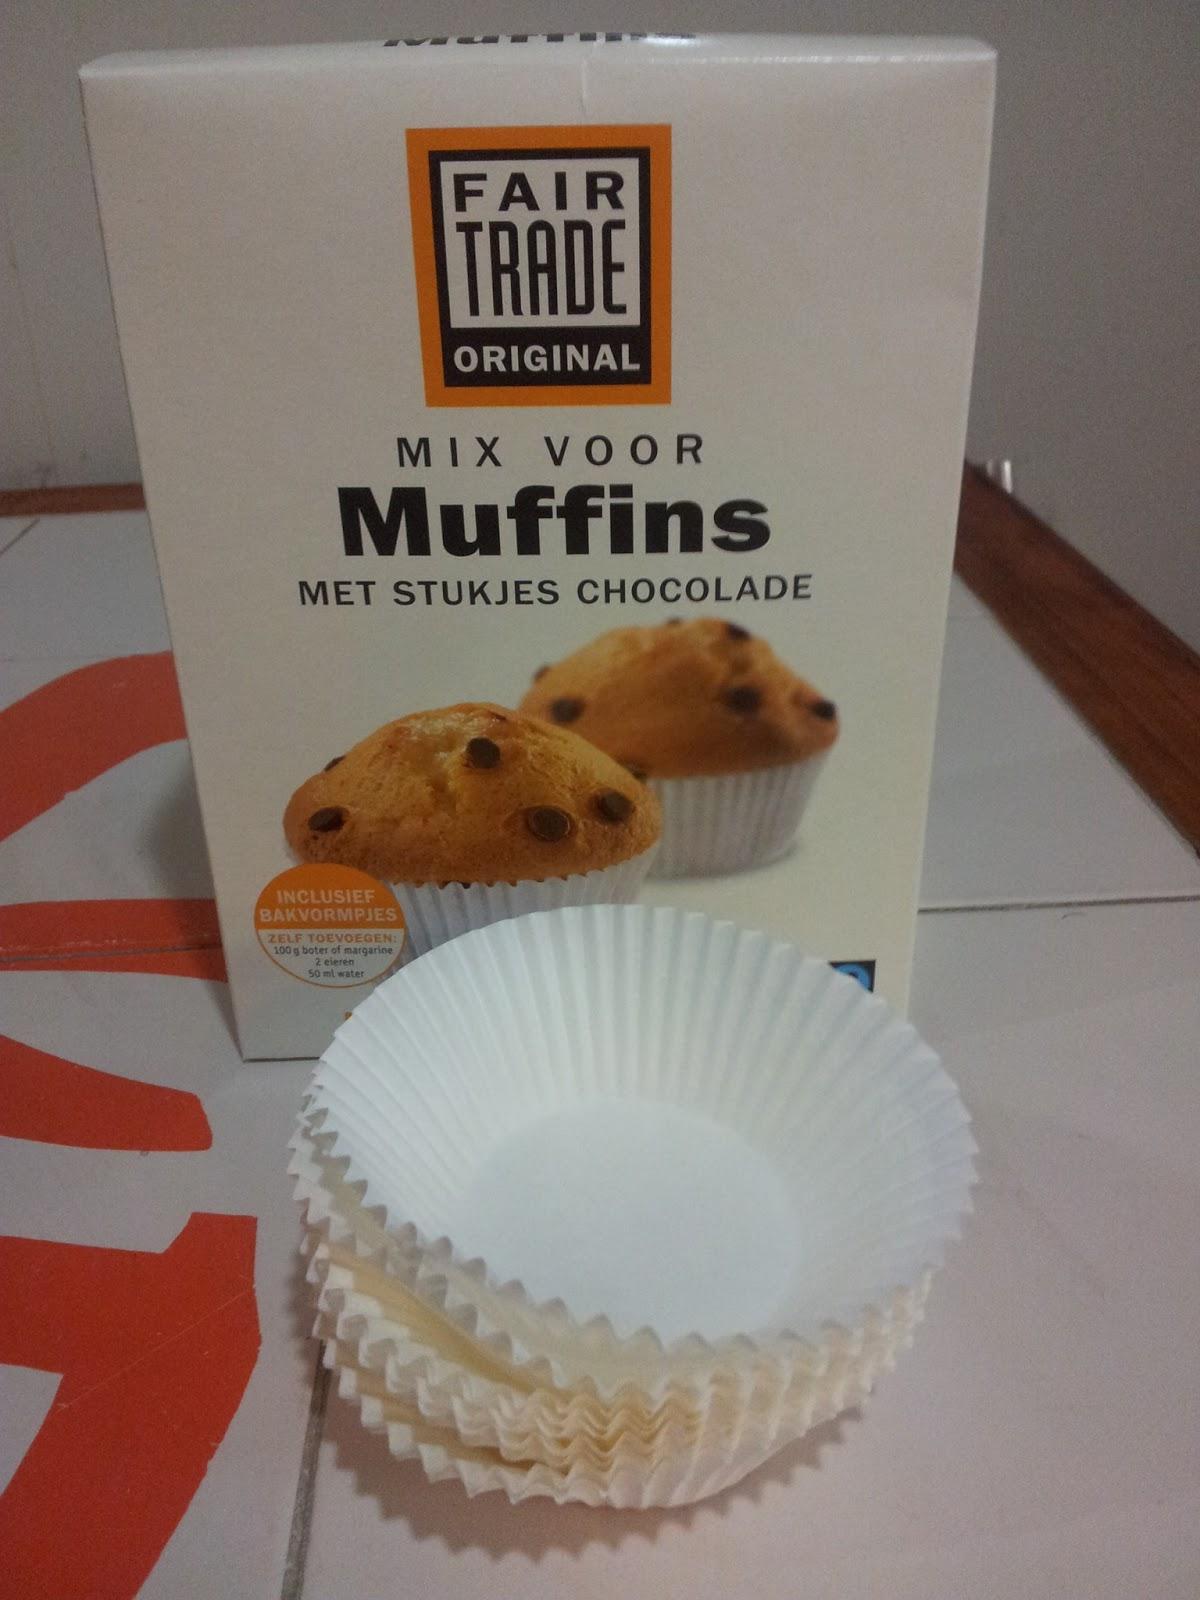 Muffins de Comercio Justo